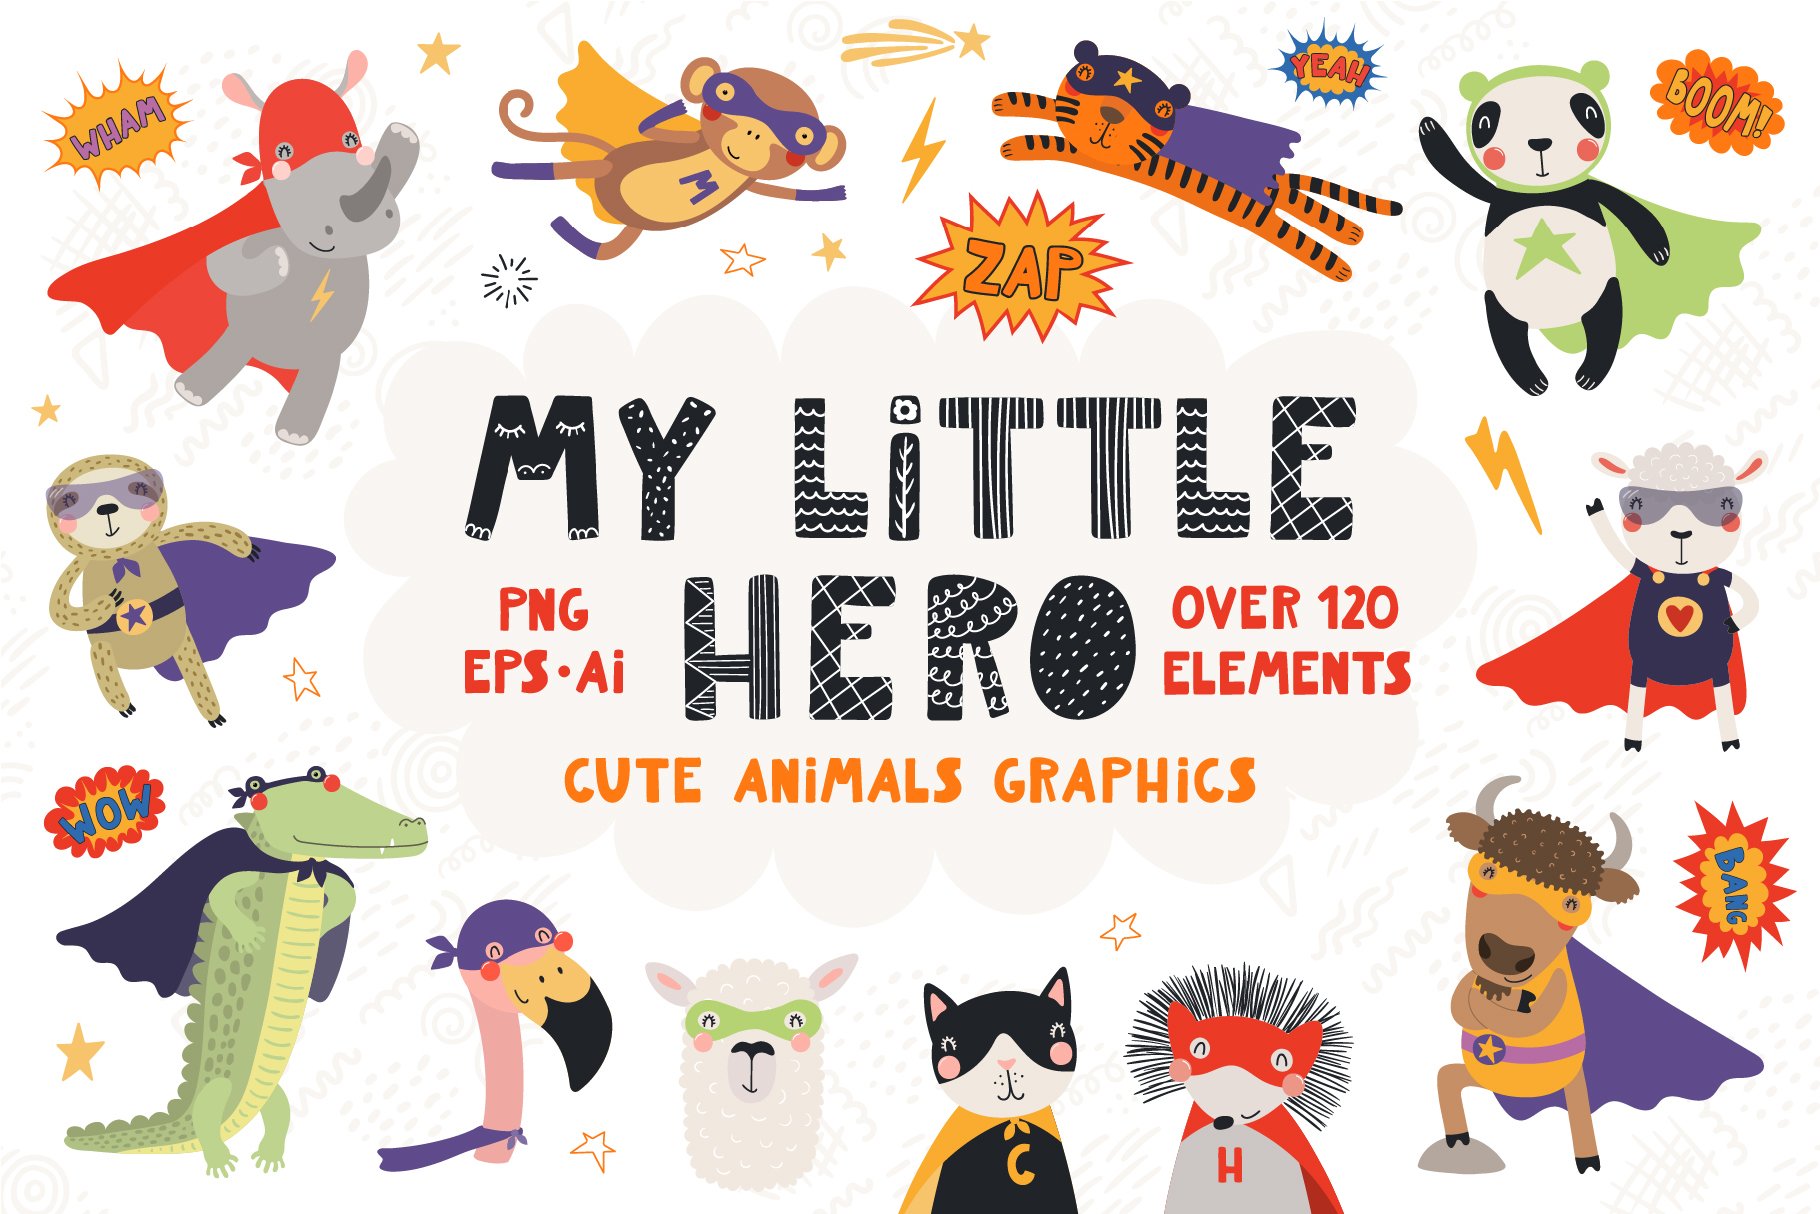 Cute Little Animals Graphic Bundle 2 preview image.